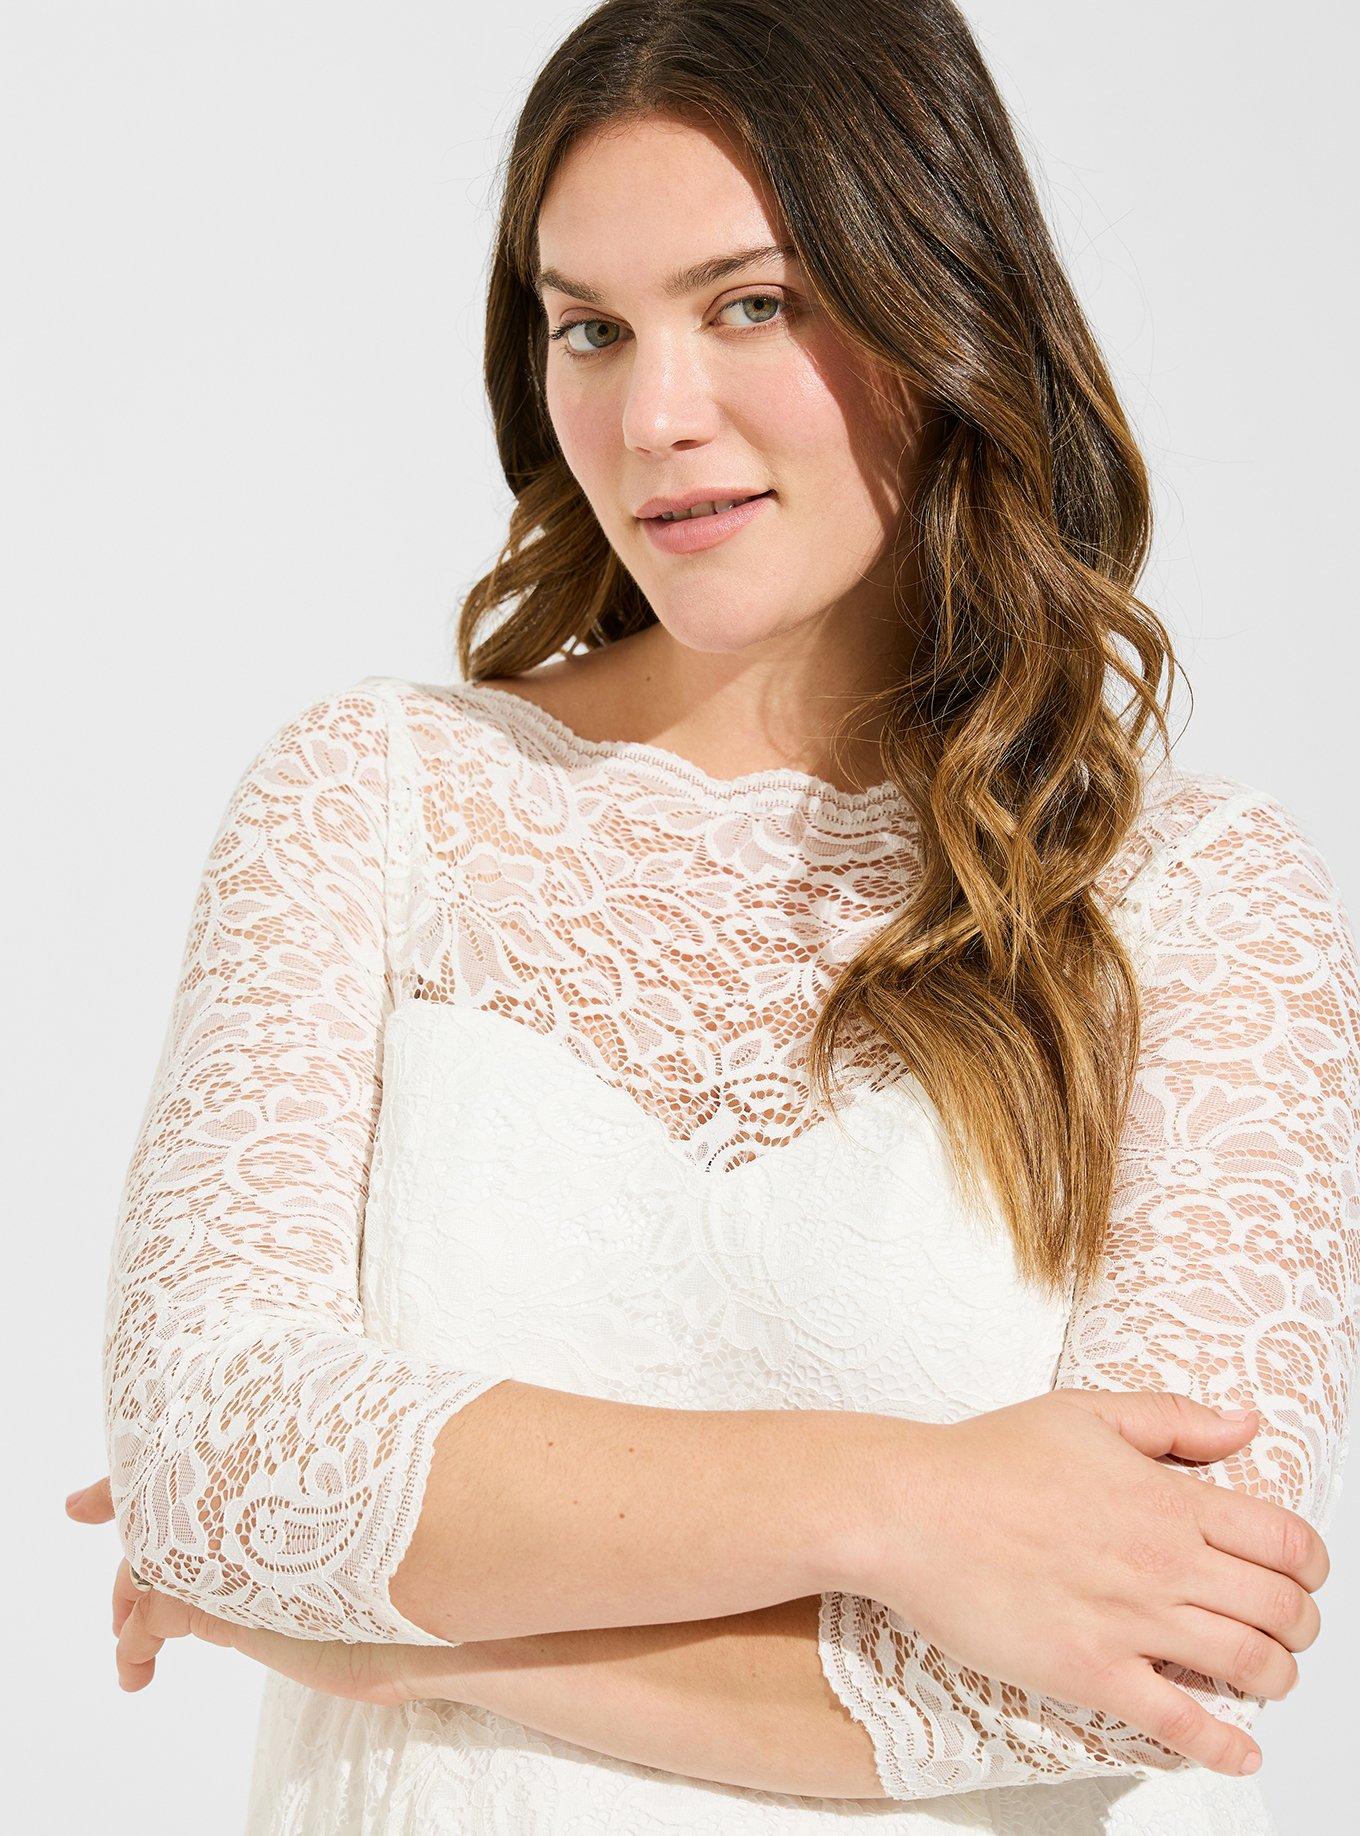 Plus Size - Ivory Lace Tea-Length Wedding Dress - Torrid